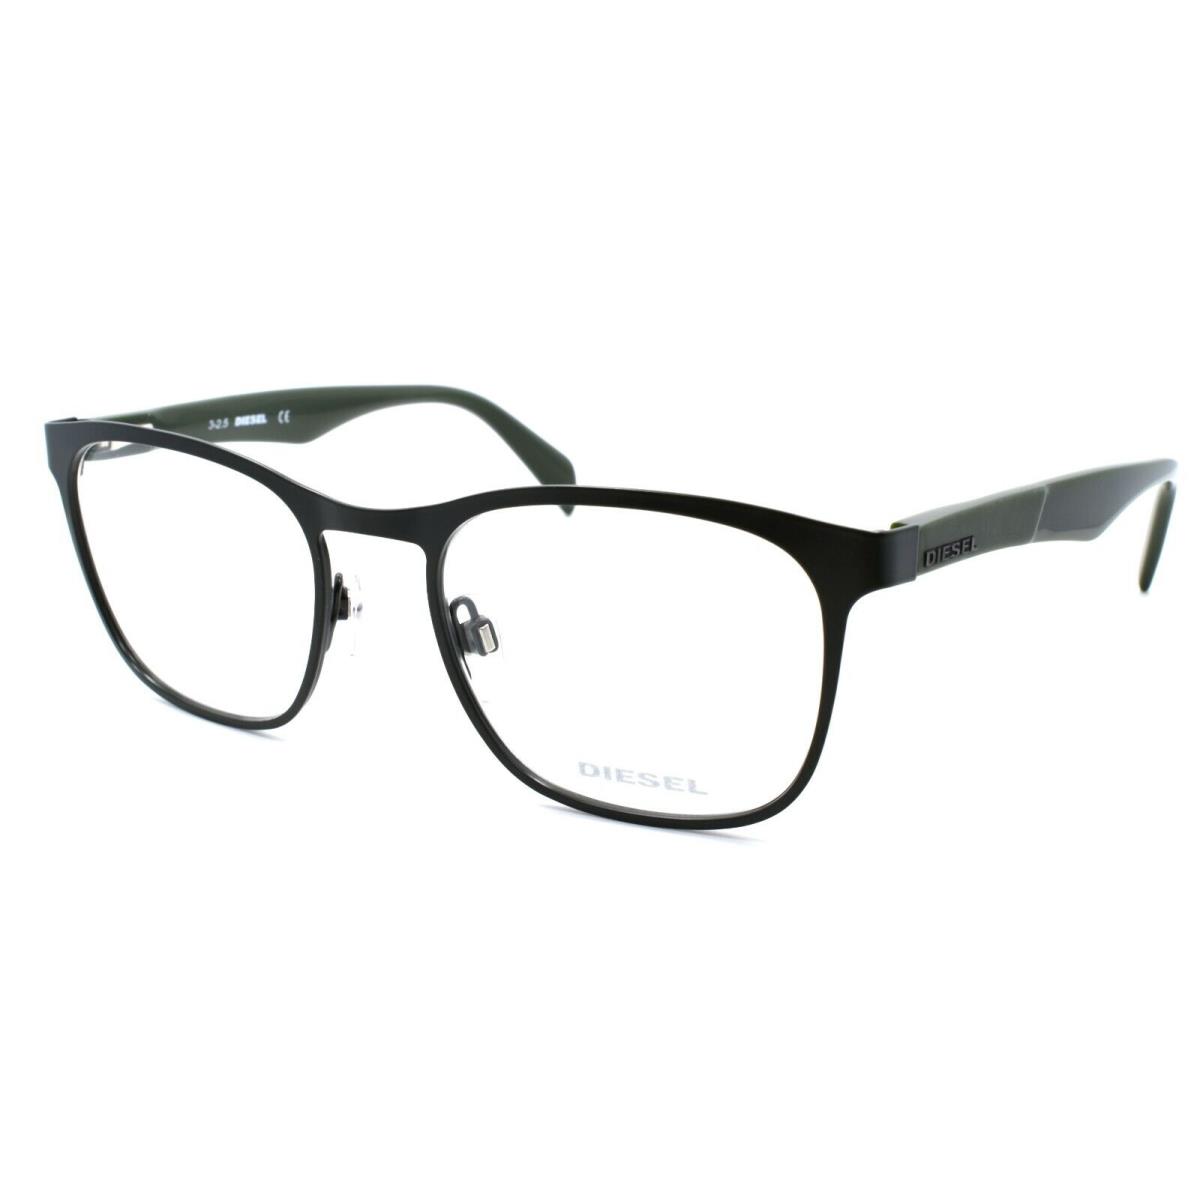 Diesel DL5209 097 Men`s Eyeglasses Frames 51-19-140 Matte Dark Green